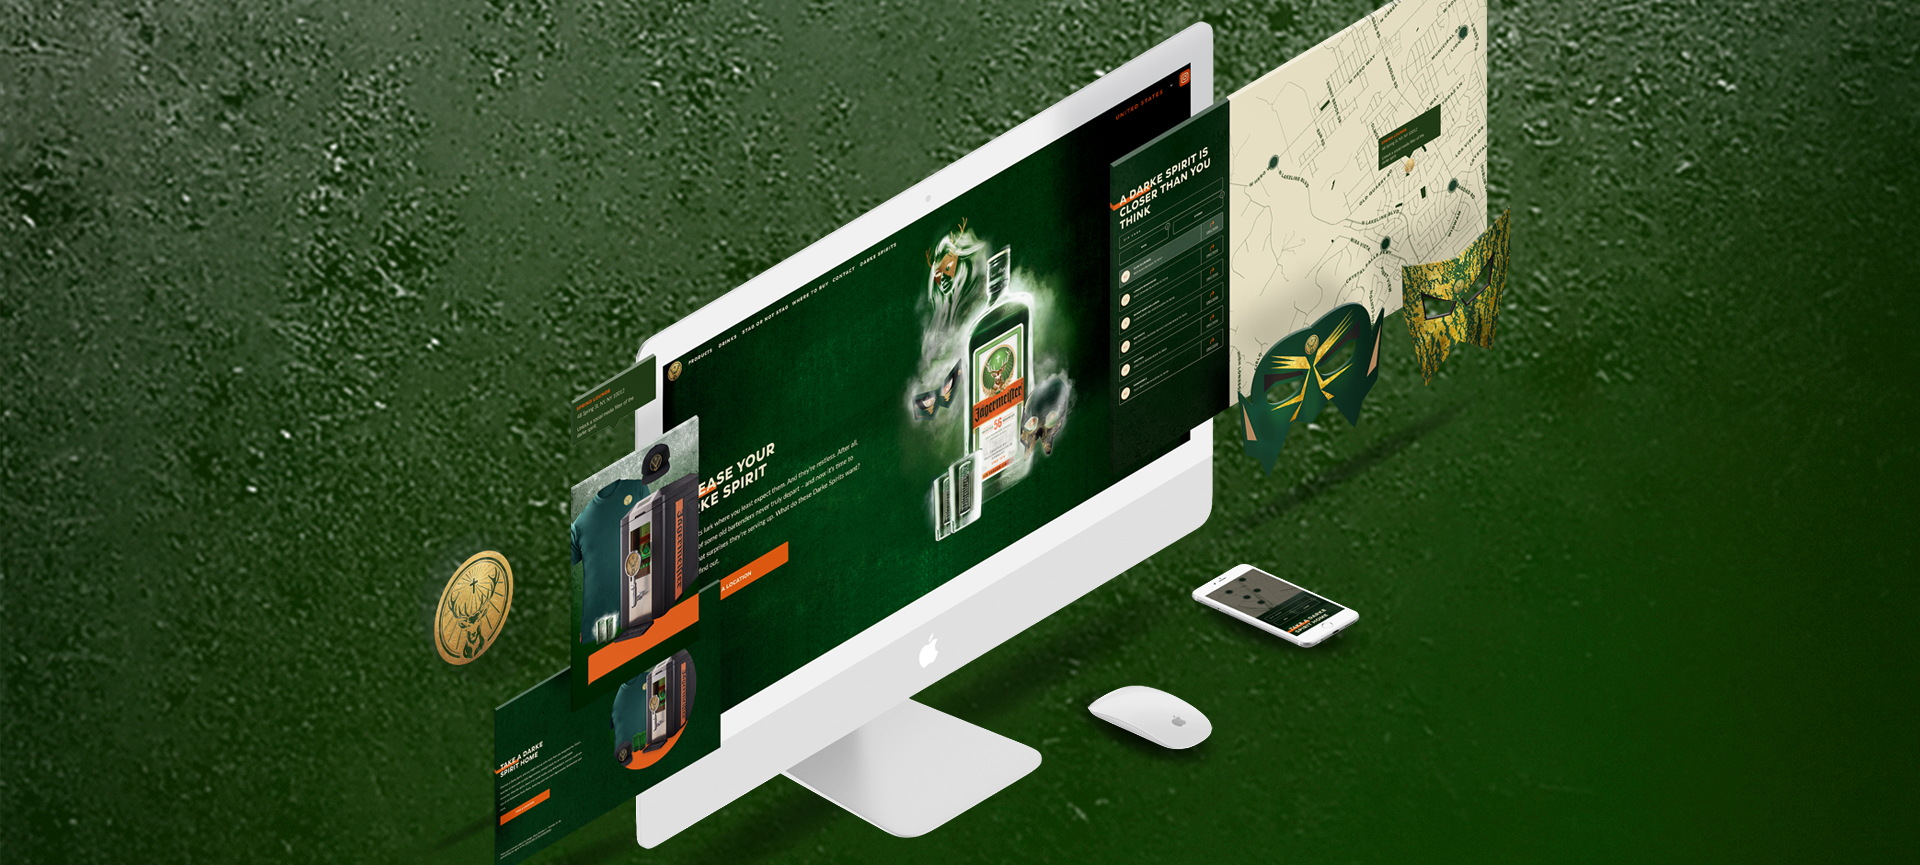 Jägermeister Micro-Site Take Over Desktop Mock up - Release Your Darke Spirit Campaign